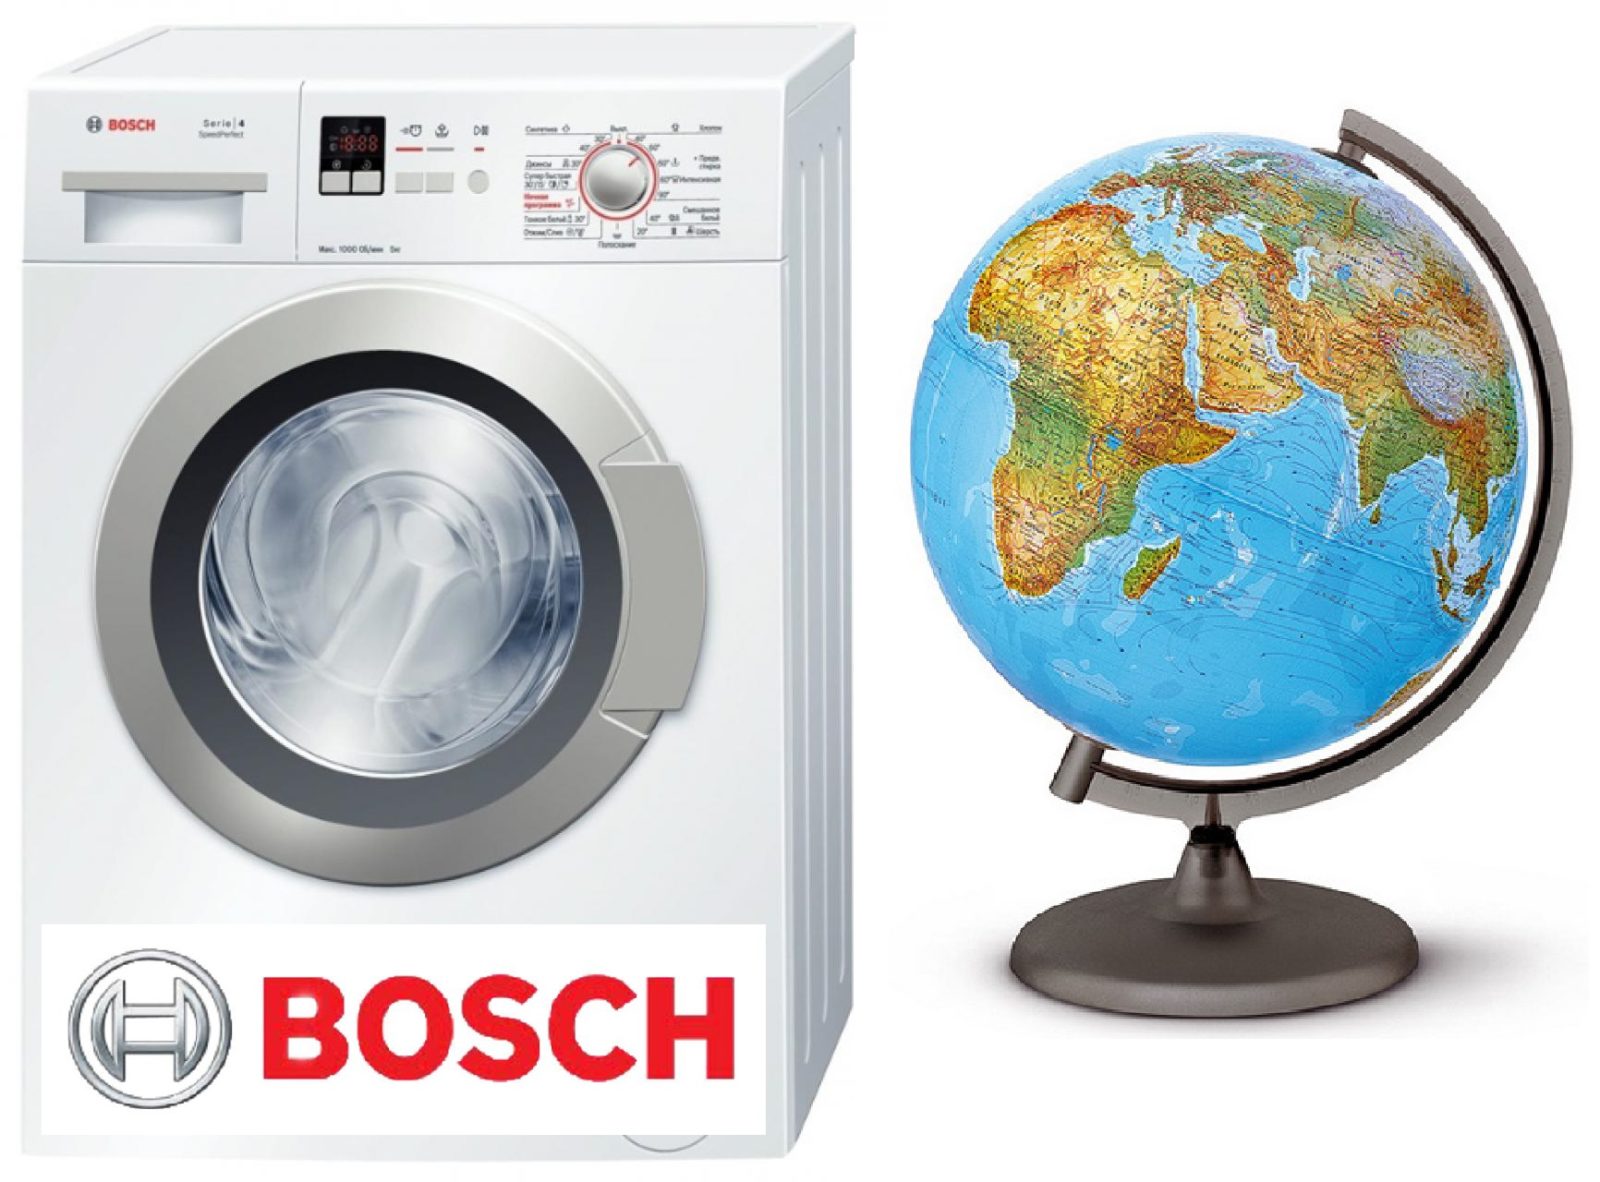 Máy giặt Bosch được lắp ráp ở đâu?